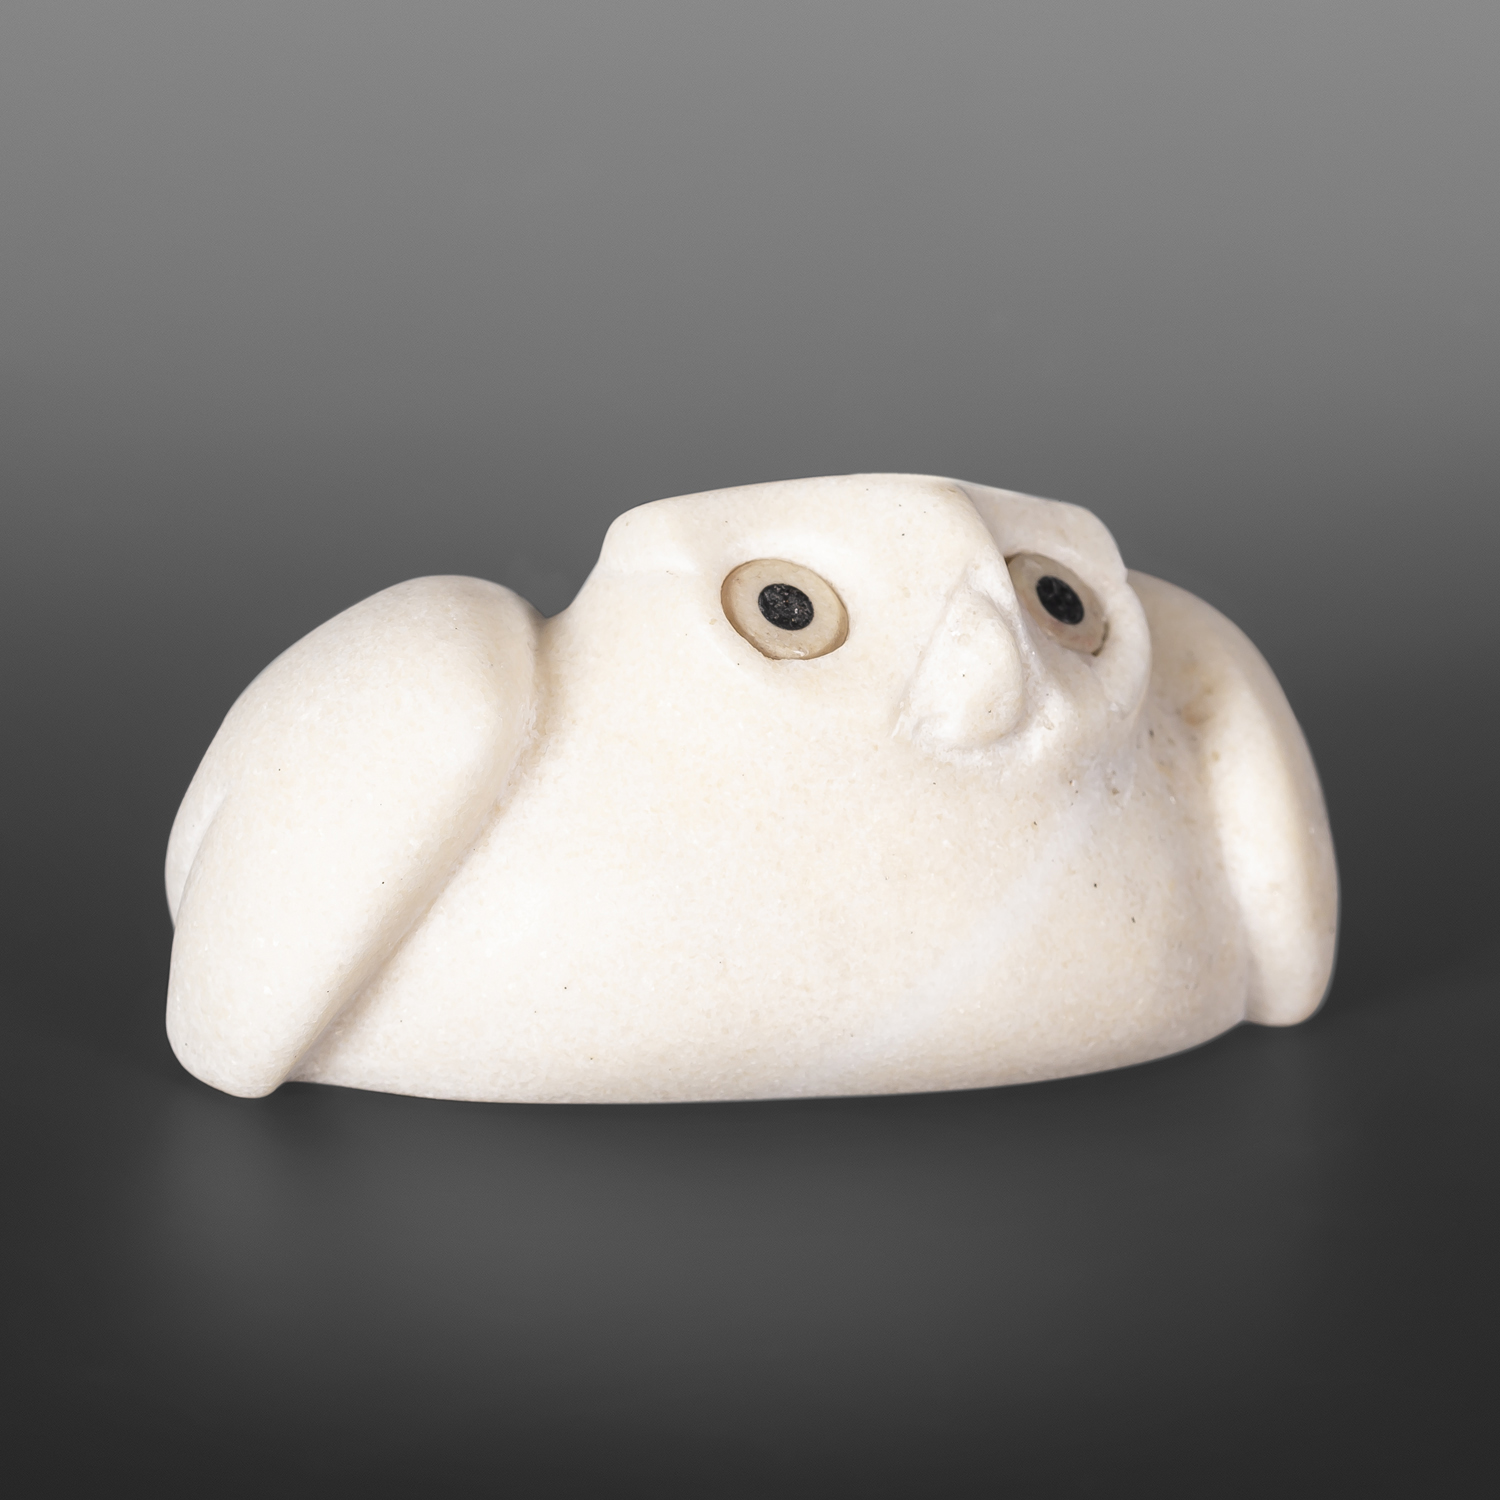 Little Owl
Joanasie Manning
Inuit
Arctic marble, bone #31
5½” x 3" x 2½”
$400
